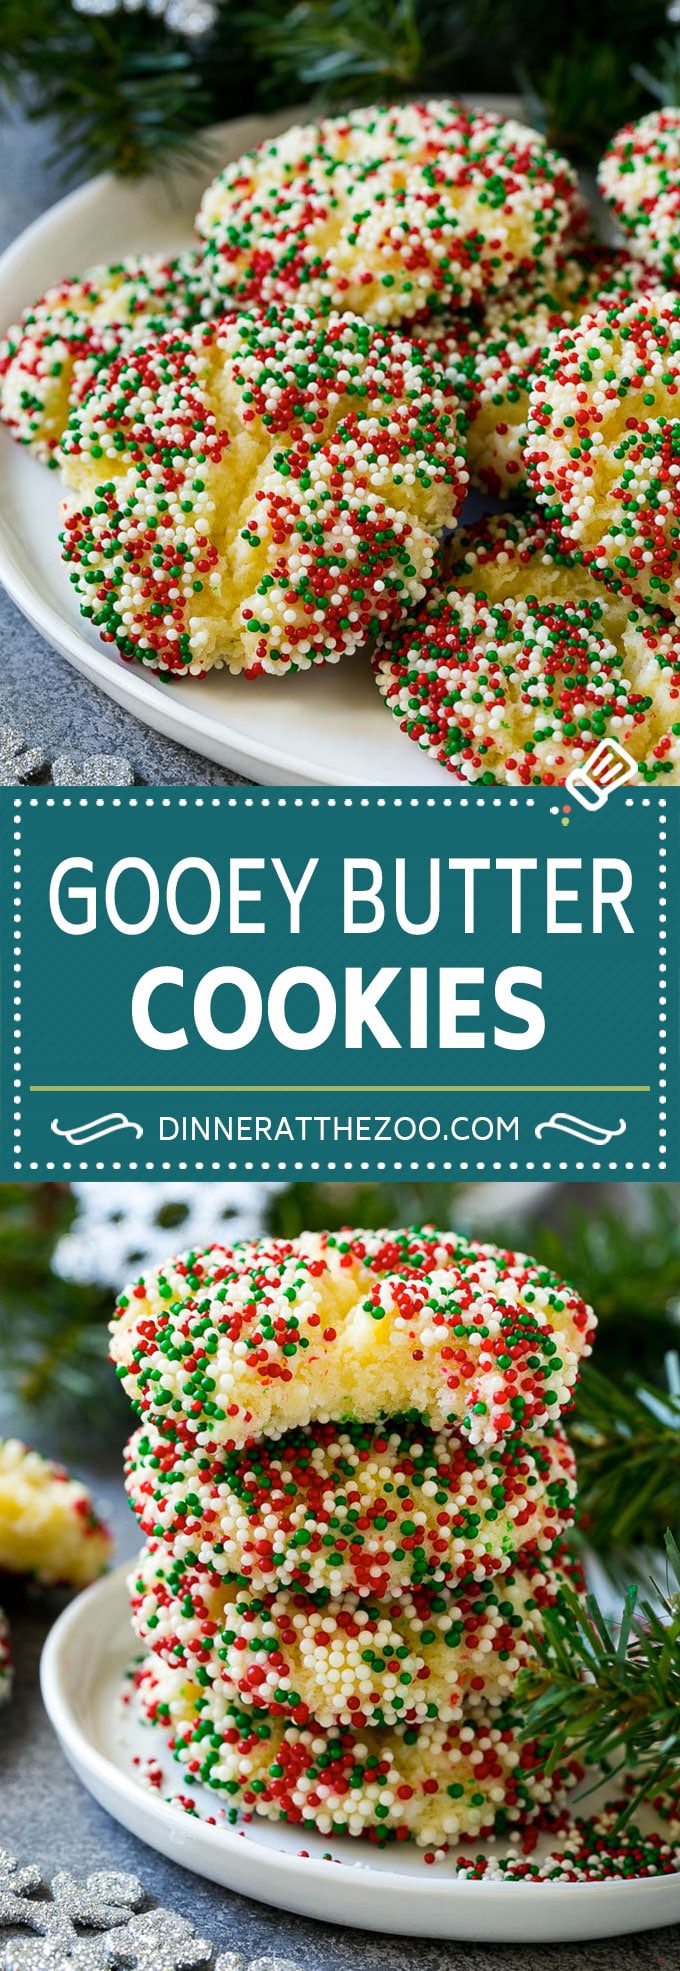 Gooey Butter Cookies Recipe | Cake Mix Cookies | Sprinkle Cookies | Christmas Cookies #cookies #butter #sprinkles #christmas #dessert #baking #dinneratthezoo